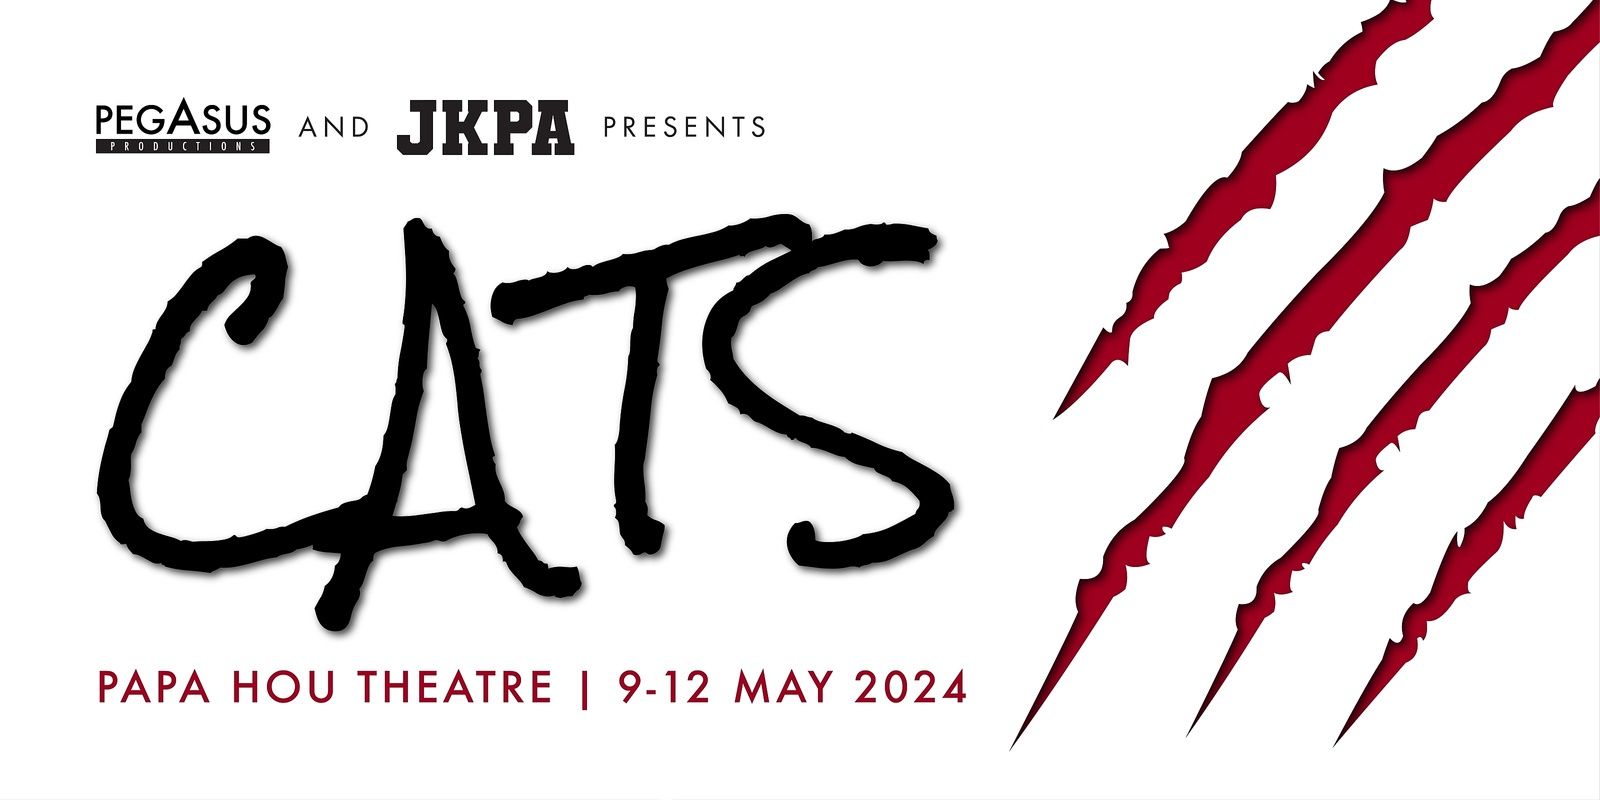 Banner image for JK Performing Arts Presents CATS